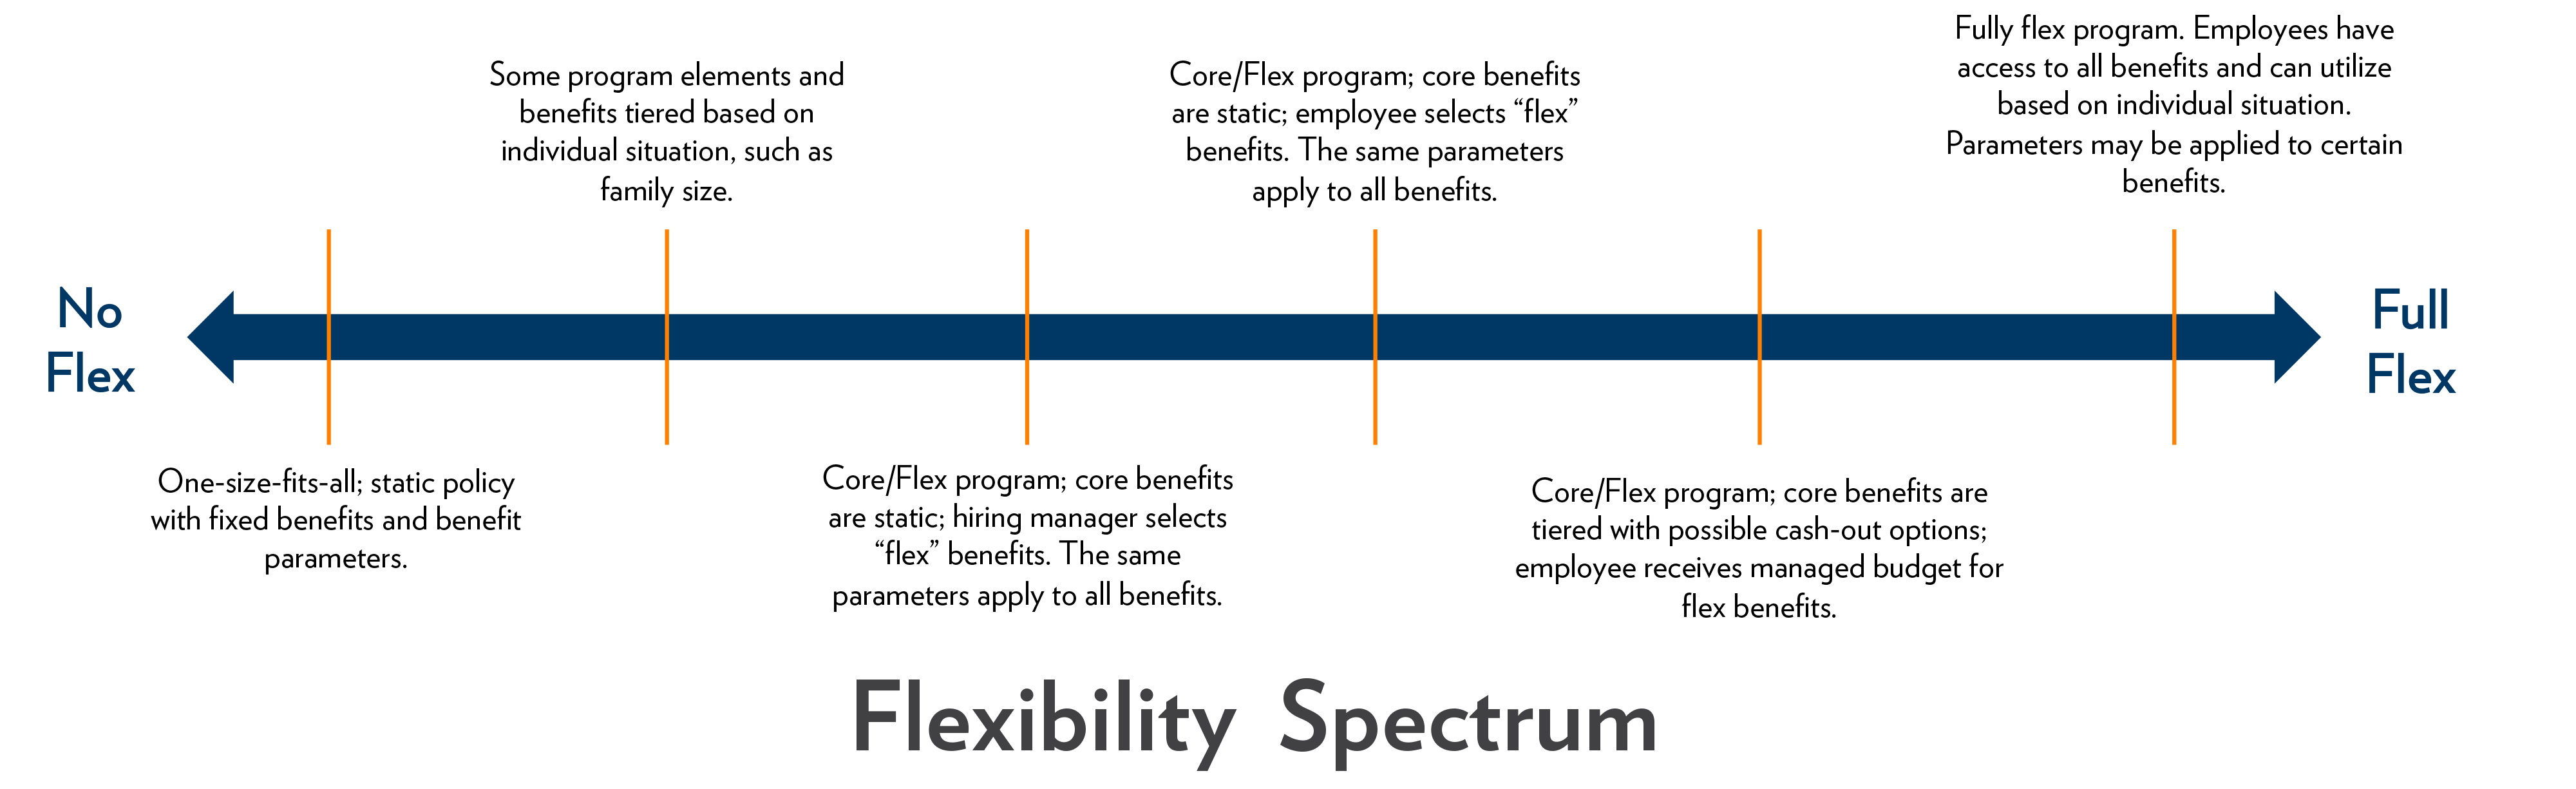 Flexibility SpectrumLRG